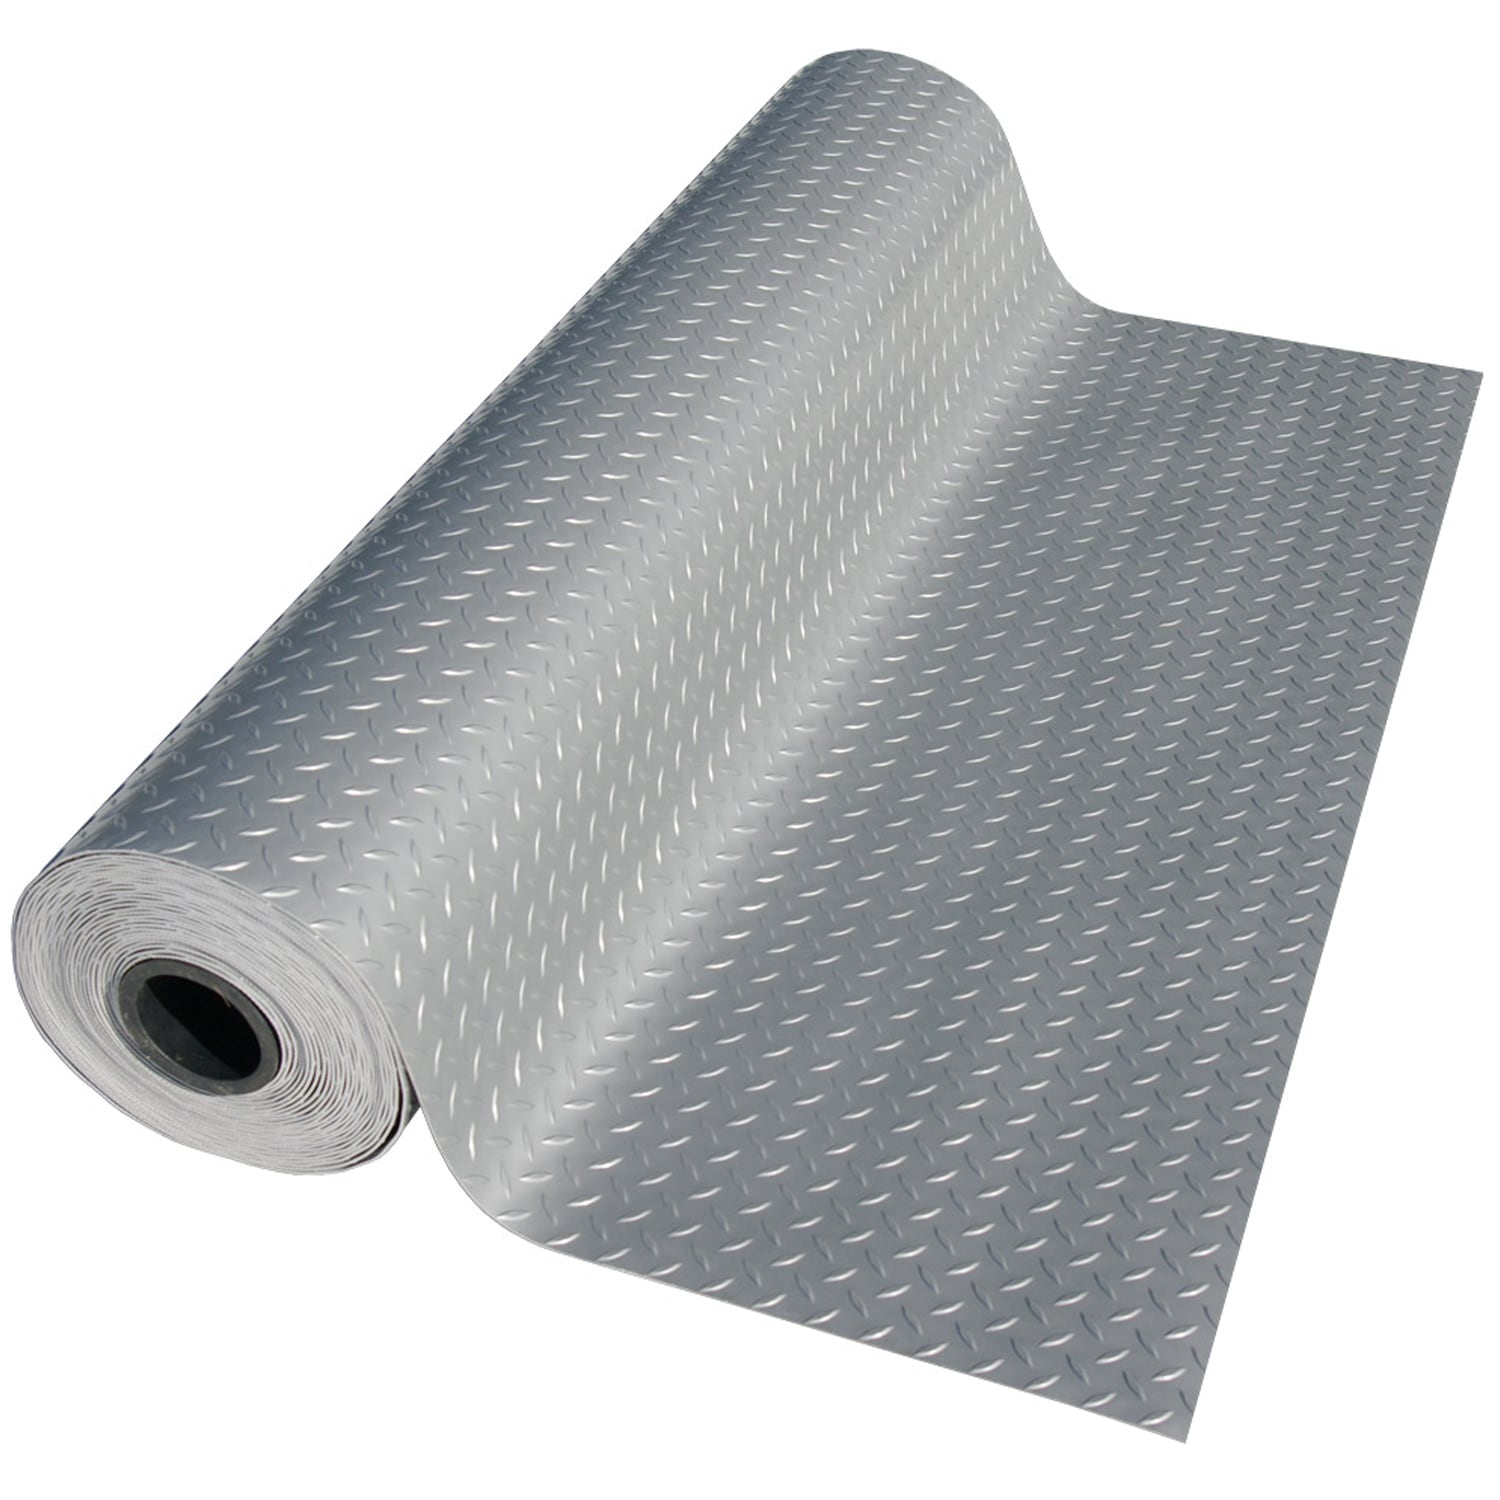 Rubber-Cal Diamond Plate Metallic PVC Flooring, Silver, 2.5mm x 4' x 7